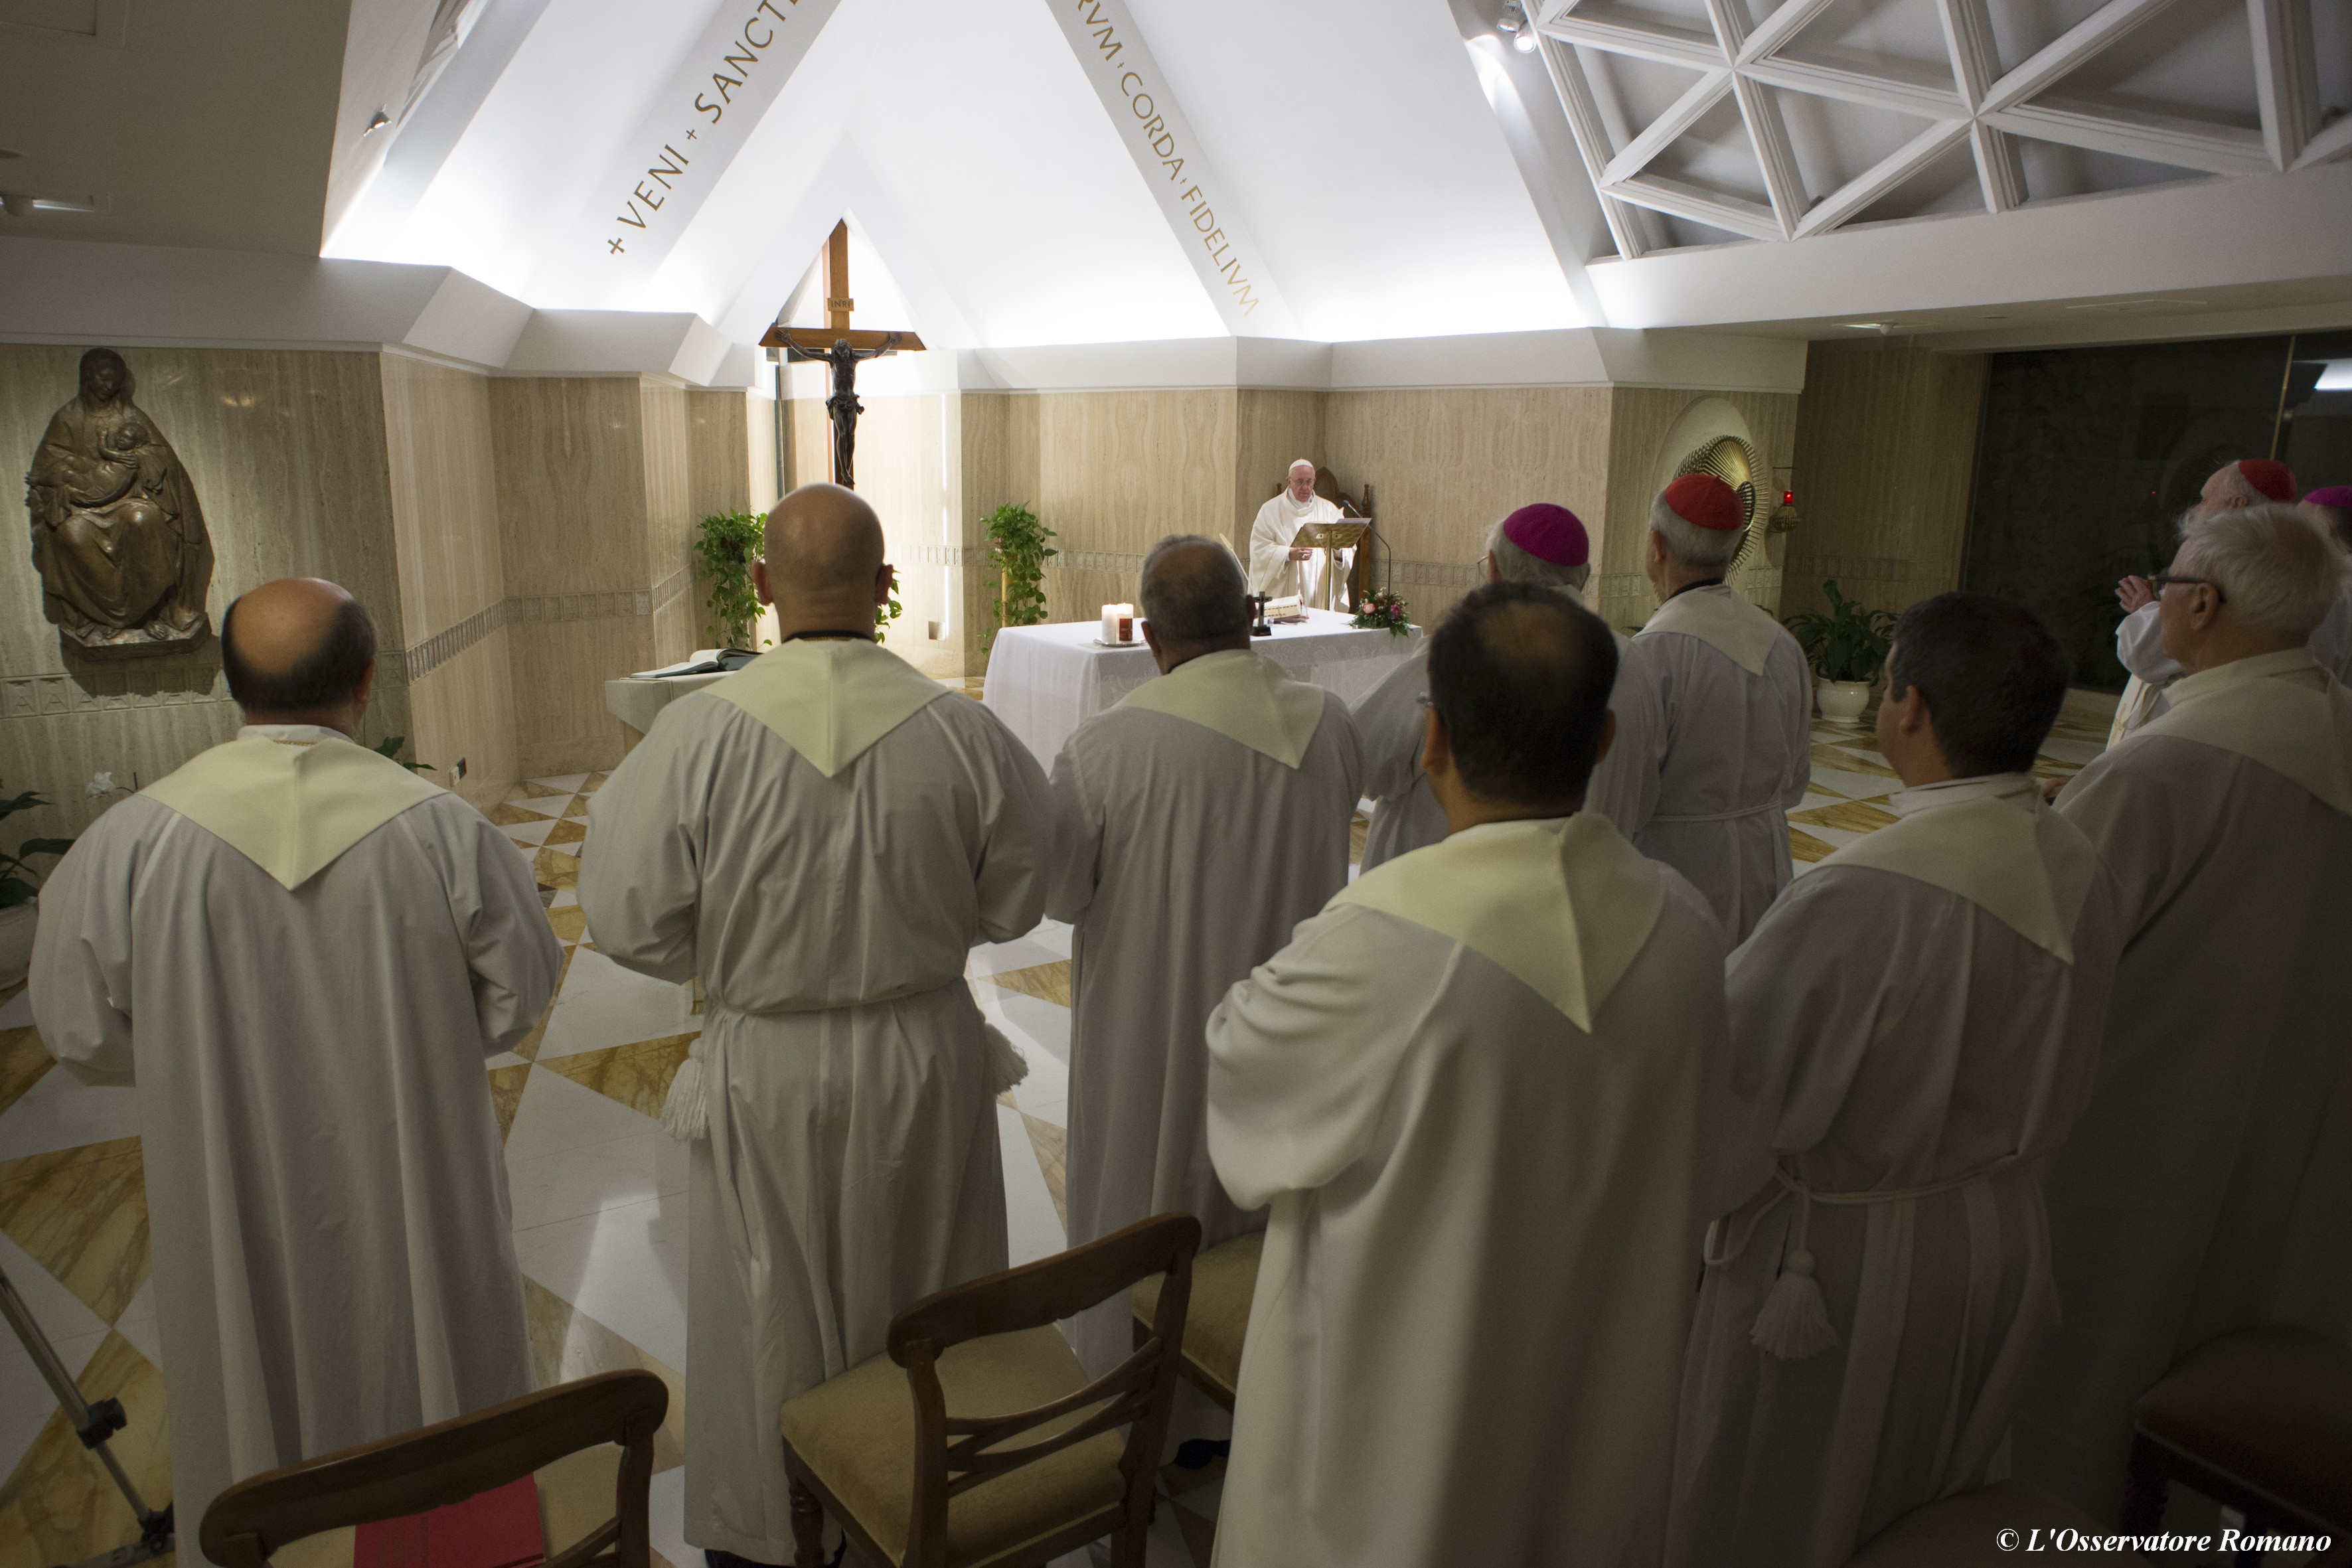 Morning Mass in the Domus Sanctae Marthae